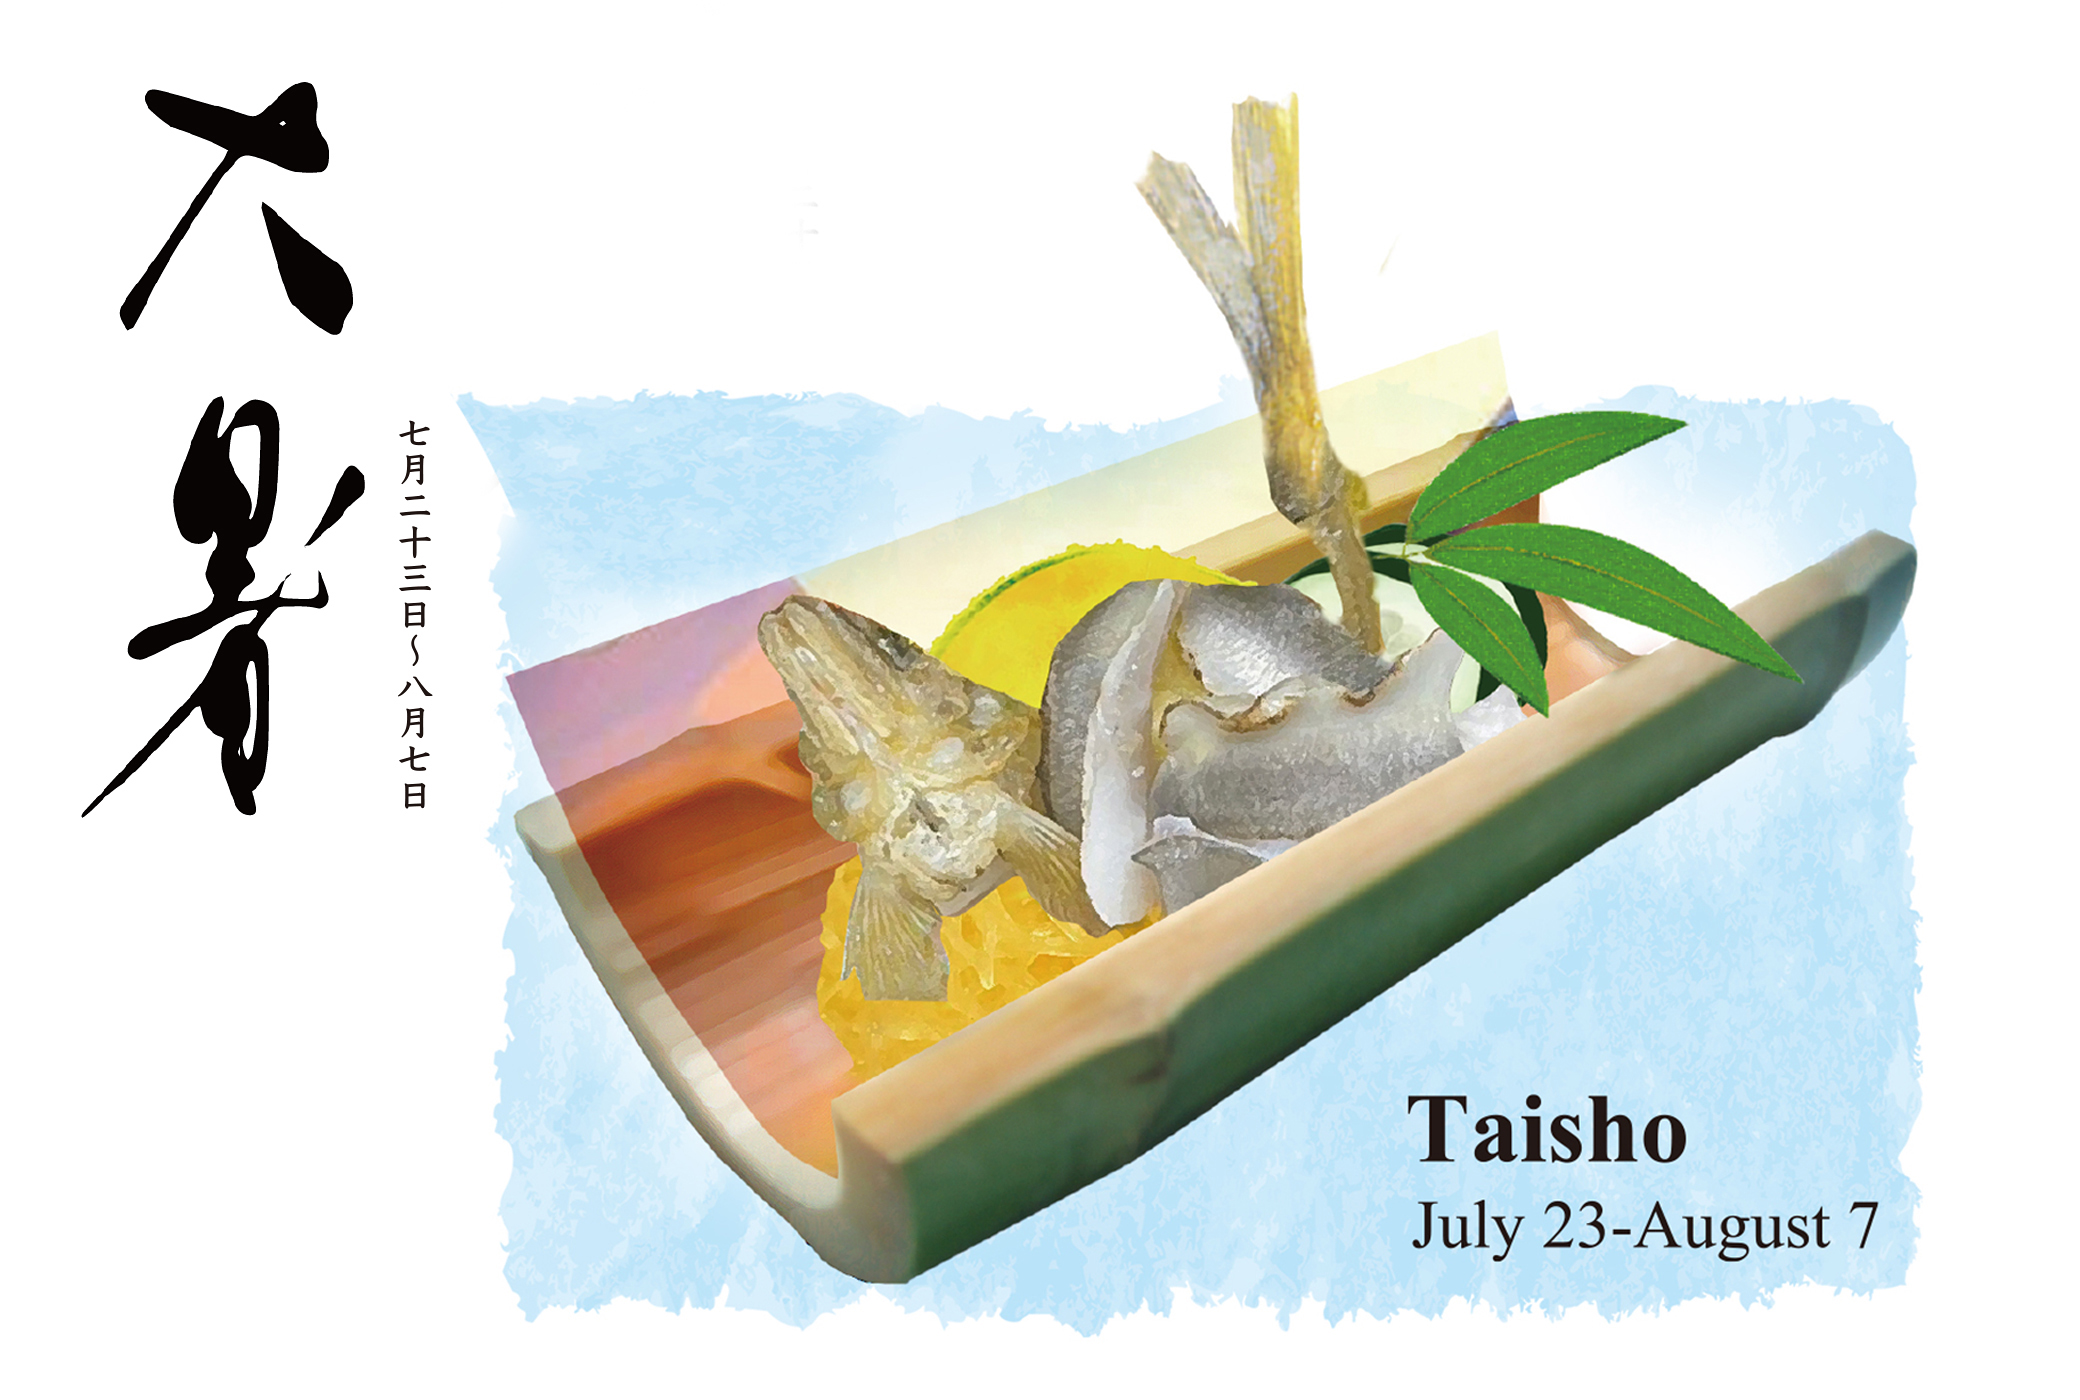 “July August Taisho